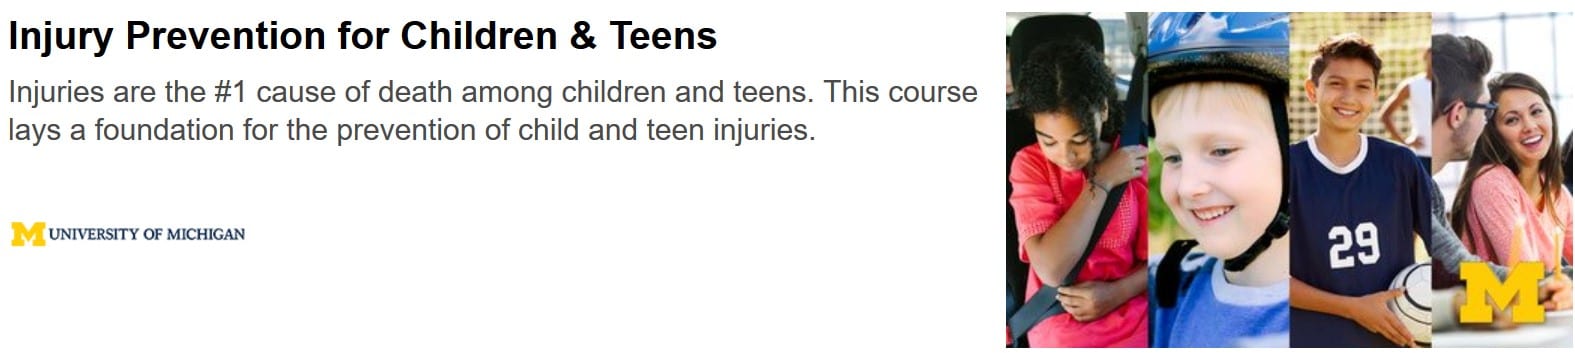 Injury Prevention for Children & Teens